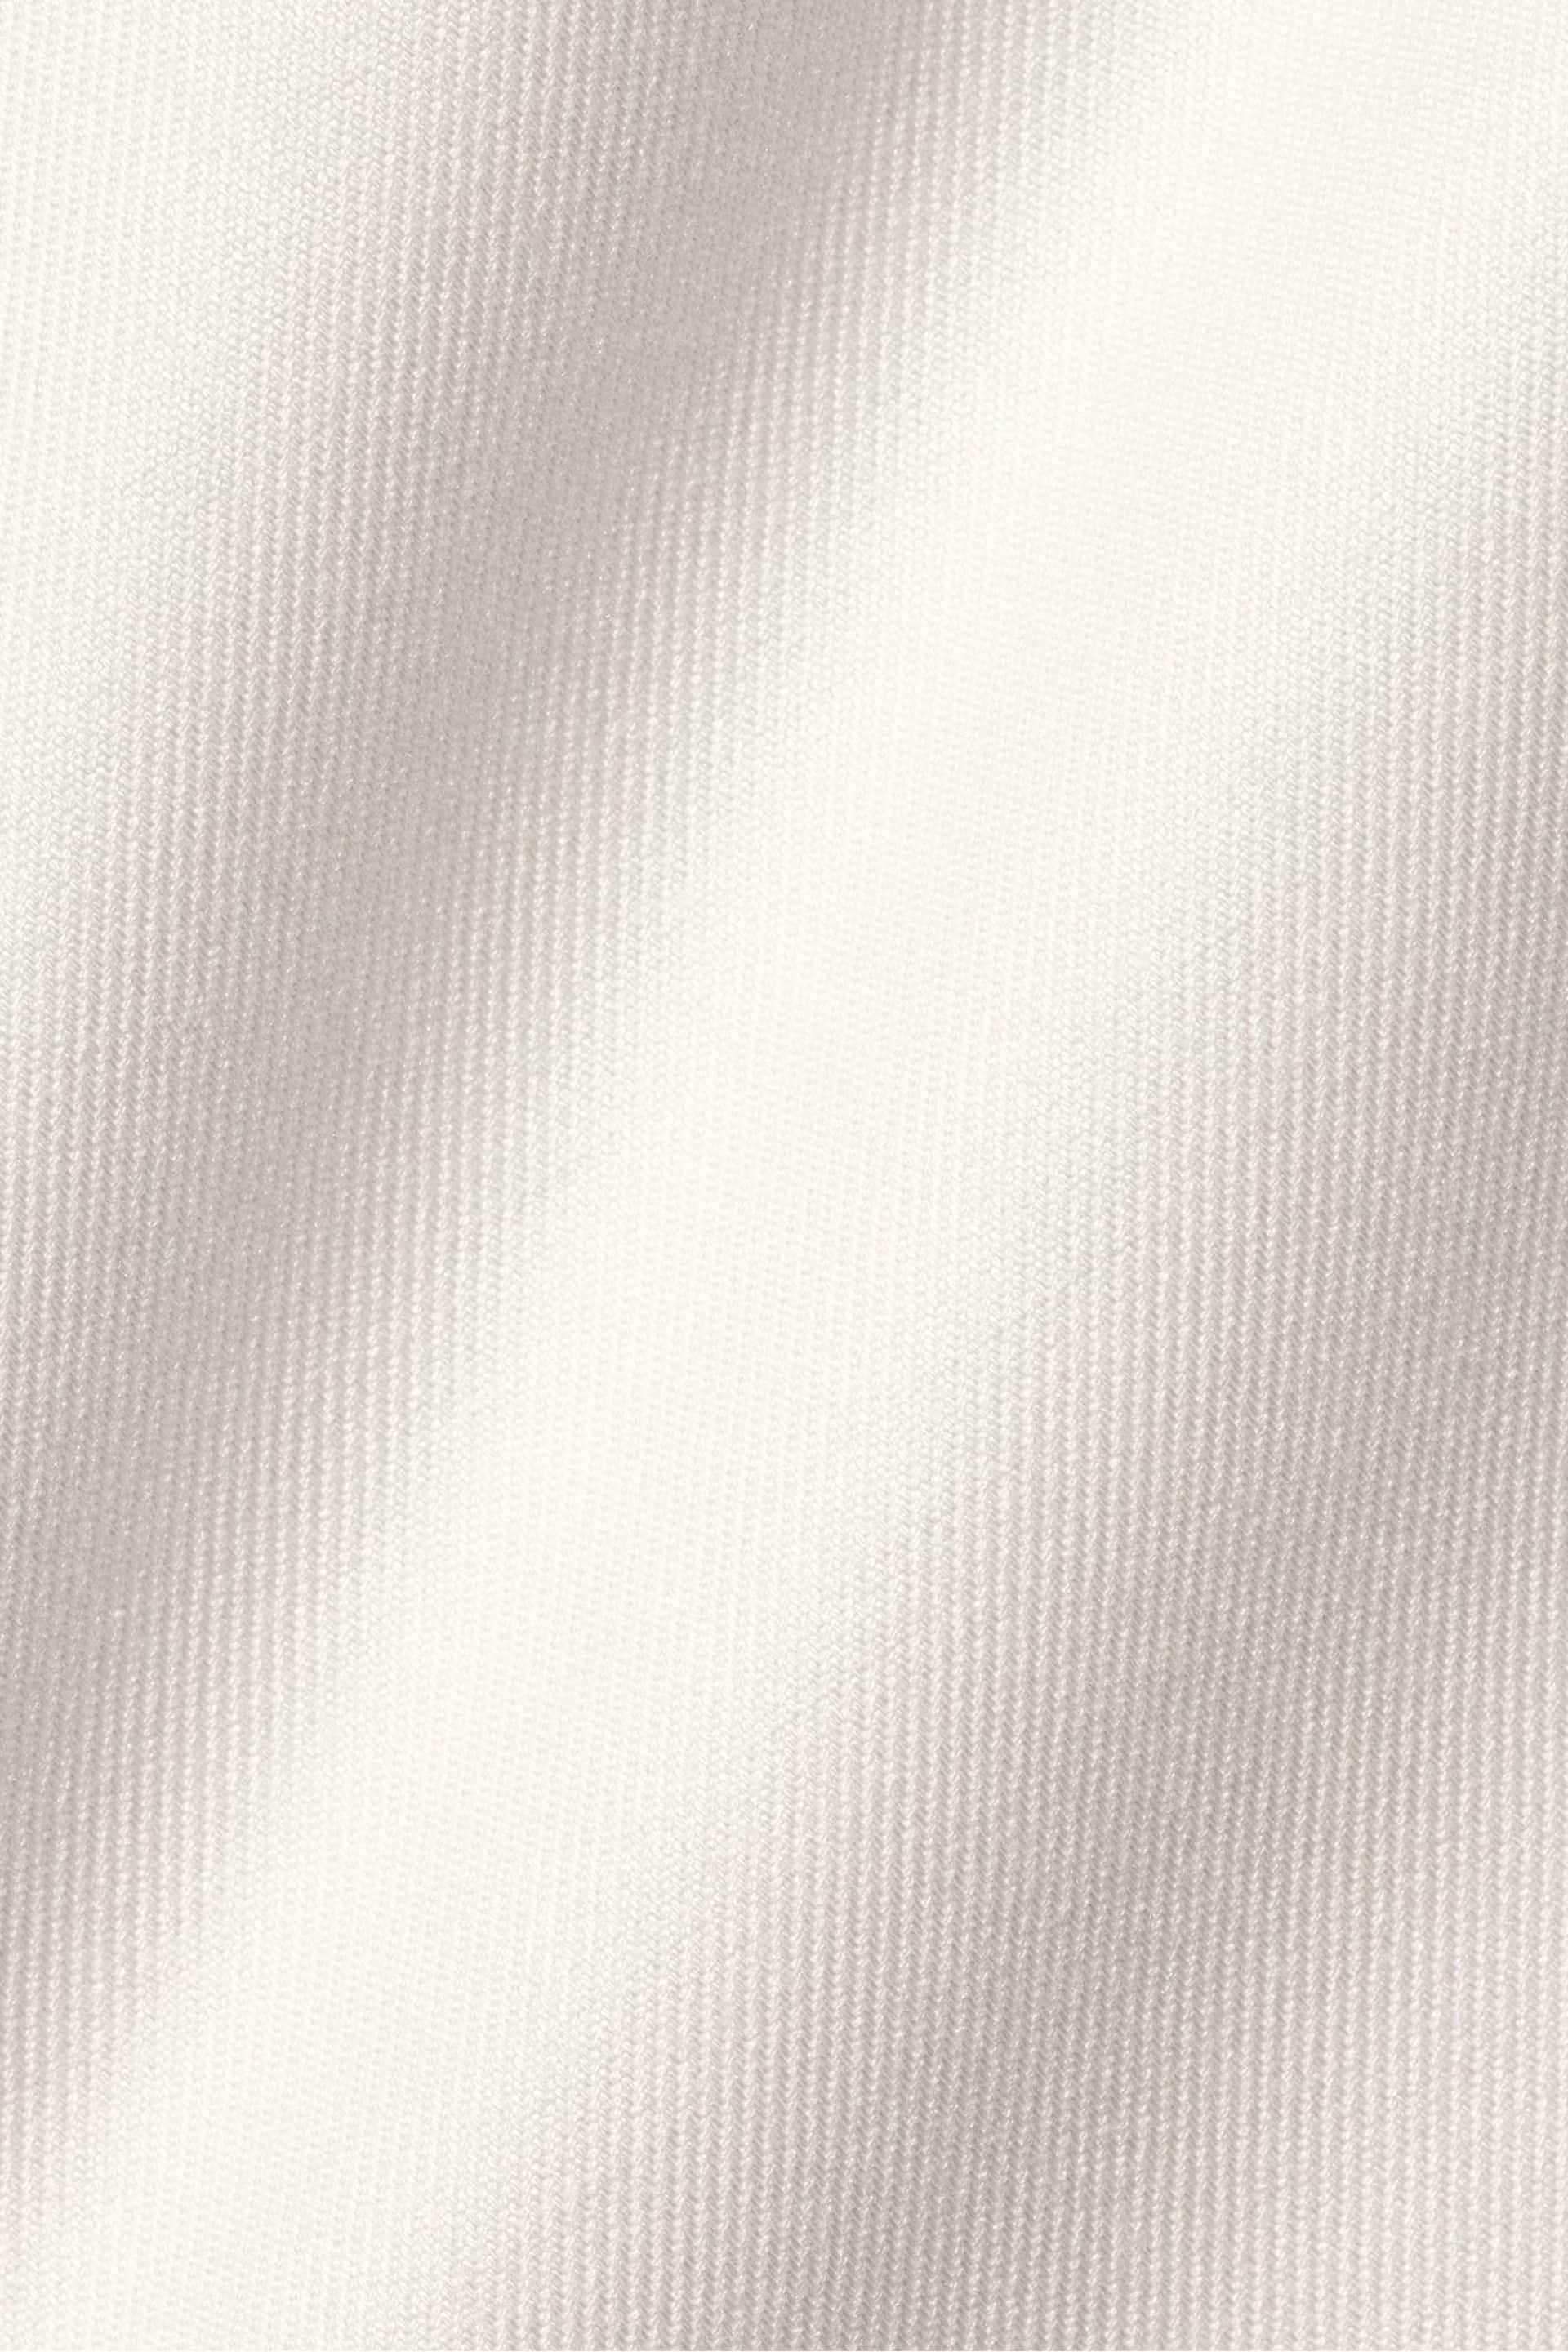 Charles Tyrwhitt White Non-iron Twill Extreme Cutaway Slim Fit Shirt - Image 5 of 5